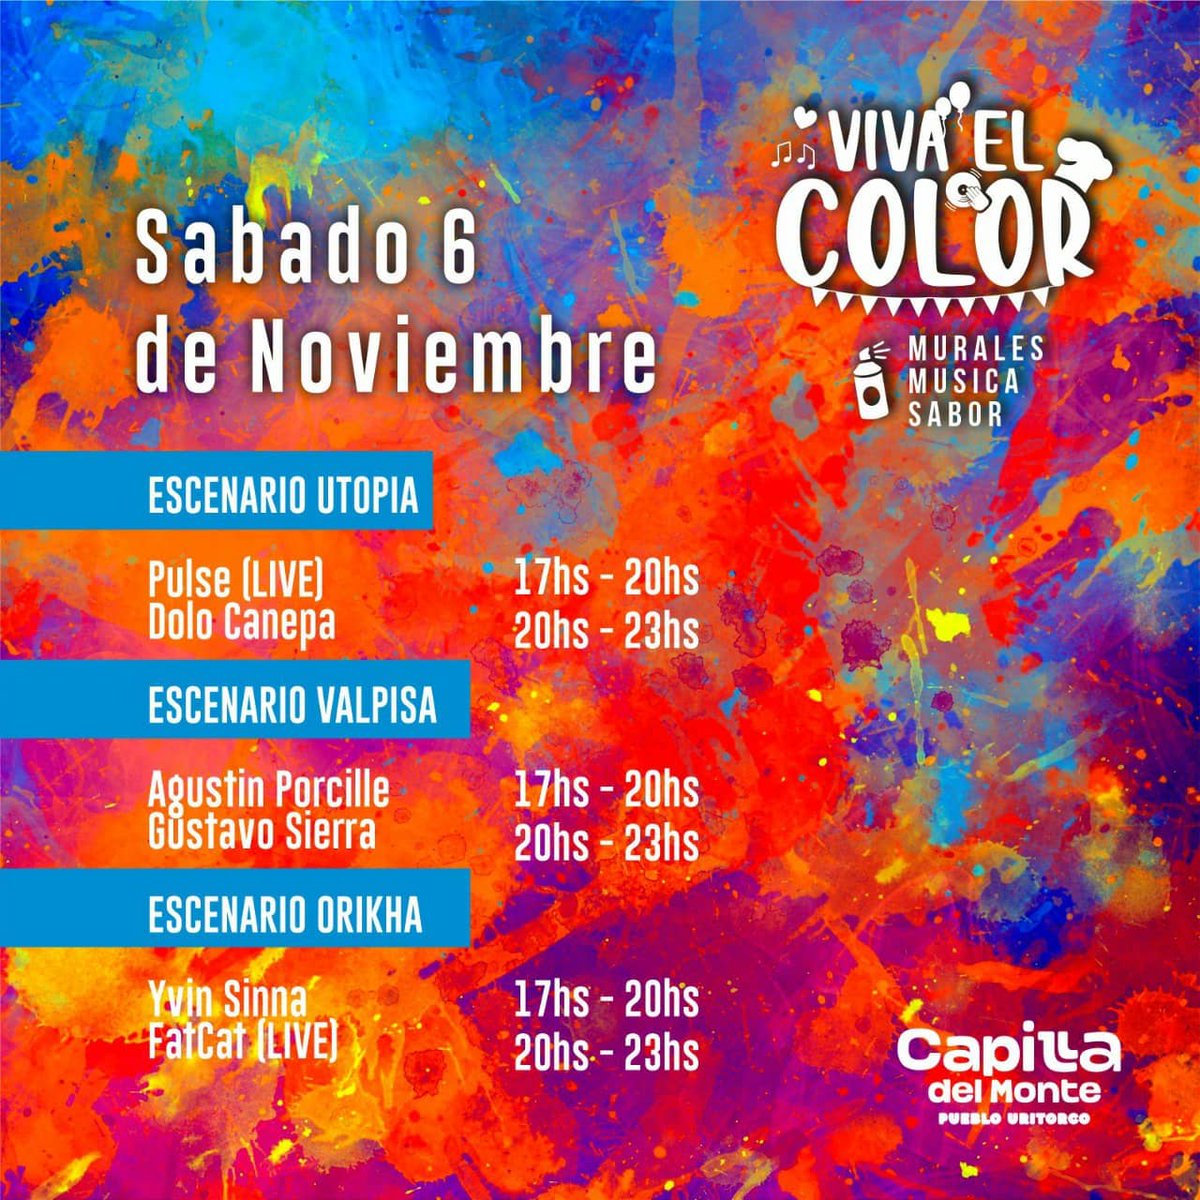 Llega el festival "Viva el color" a Capilla del Monte • Canal C